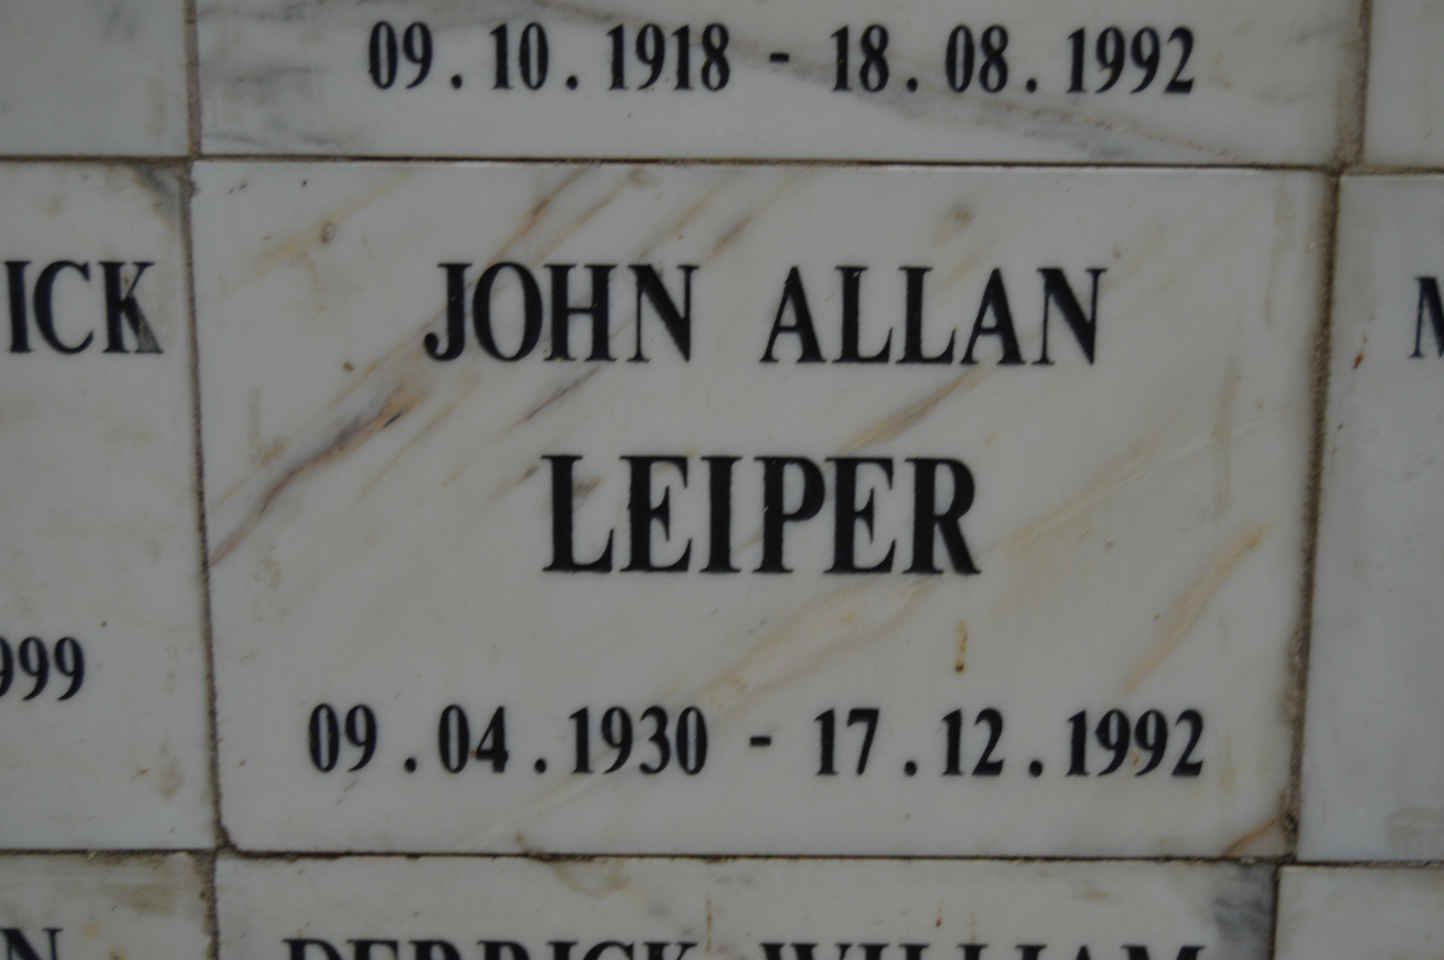 LEIPER John Allan 1930-1992